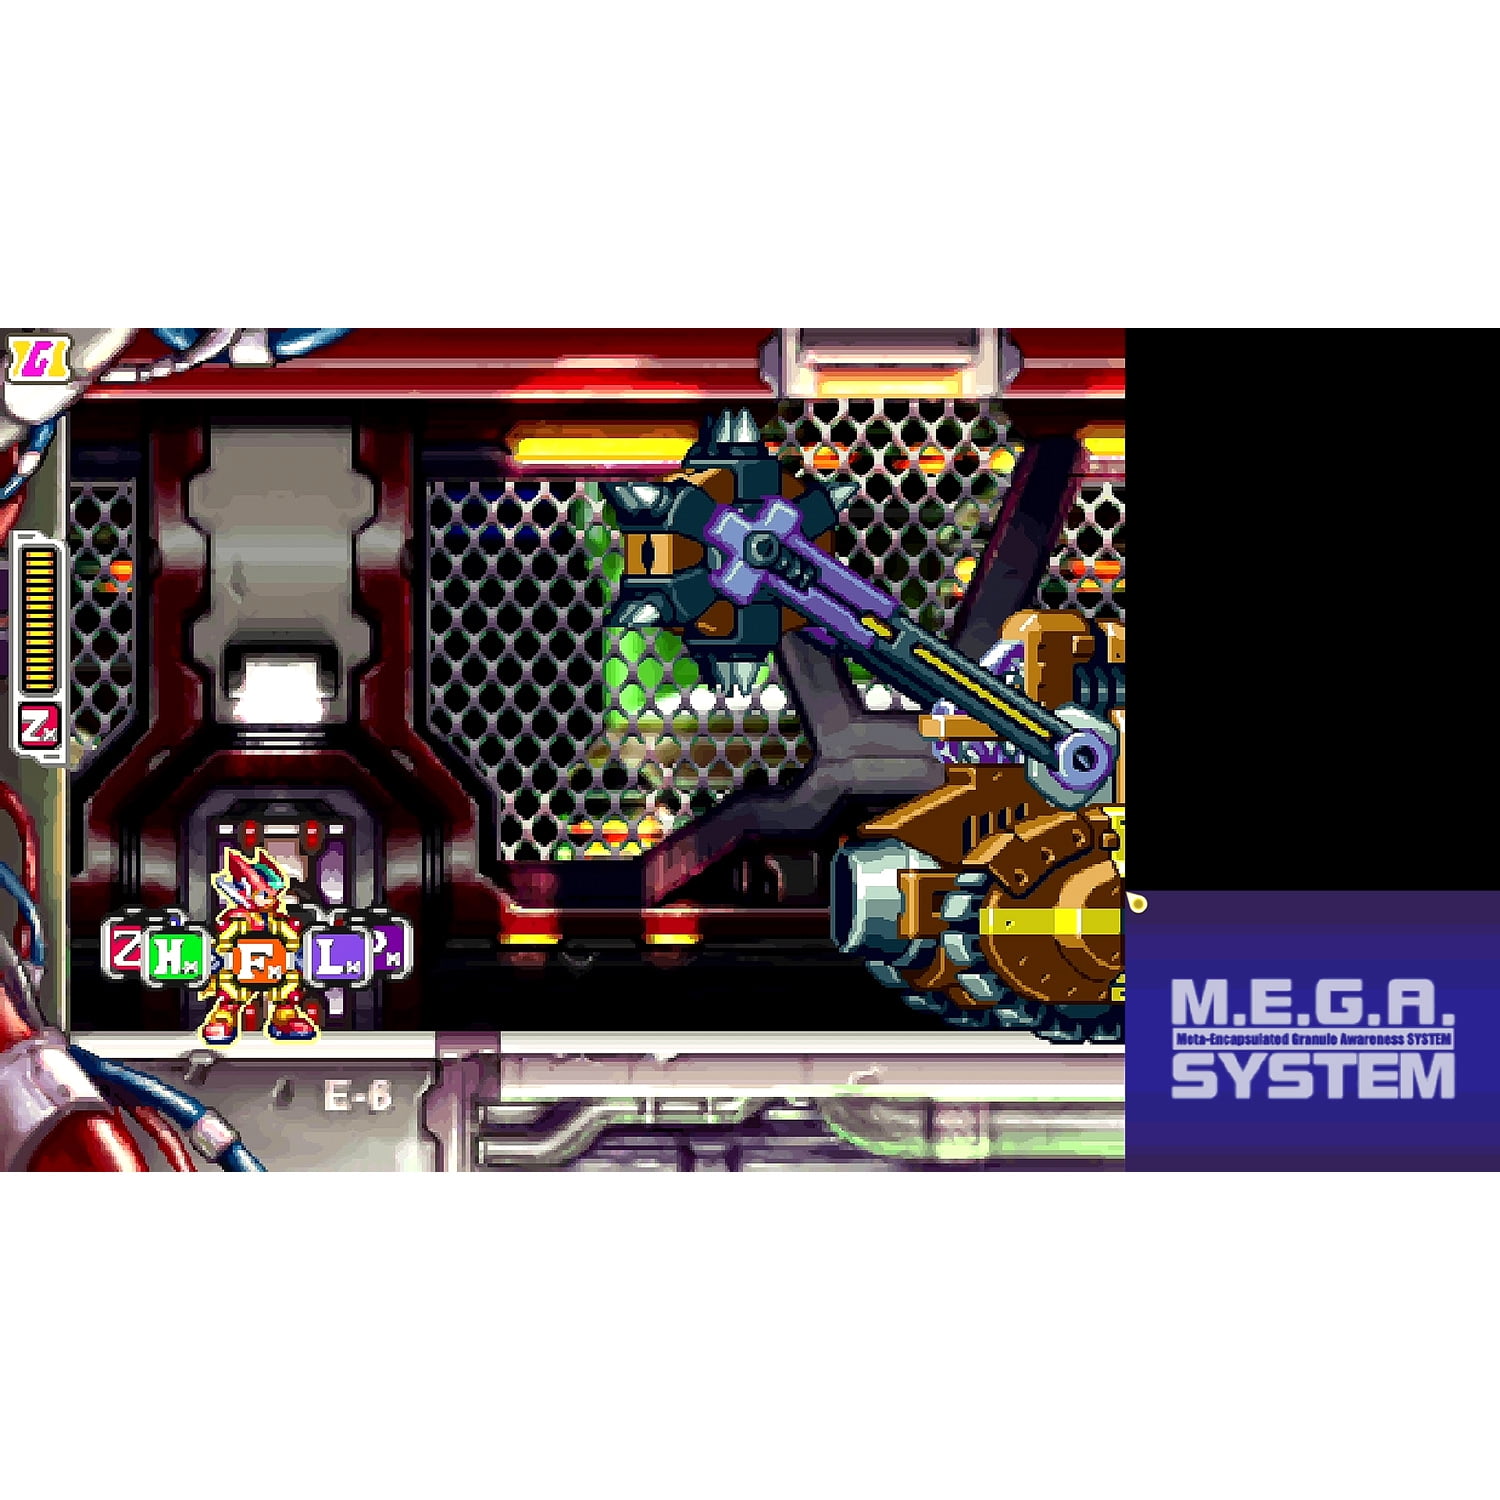 MEGA Man Zero/ZX Legacy Collection, Capcom, Xbox One, 013388550517 